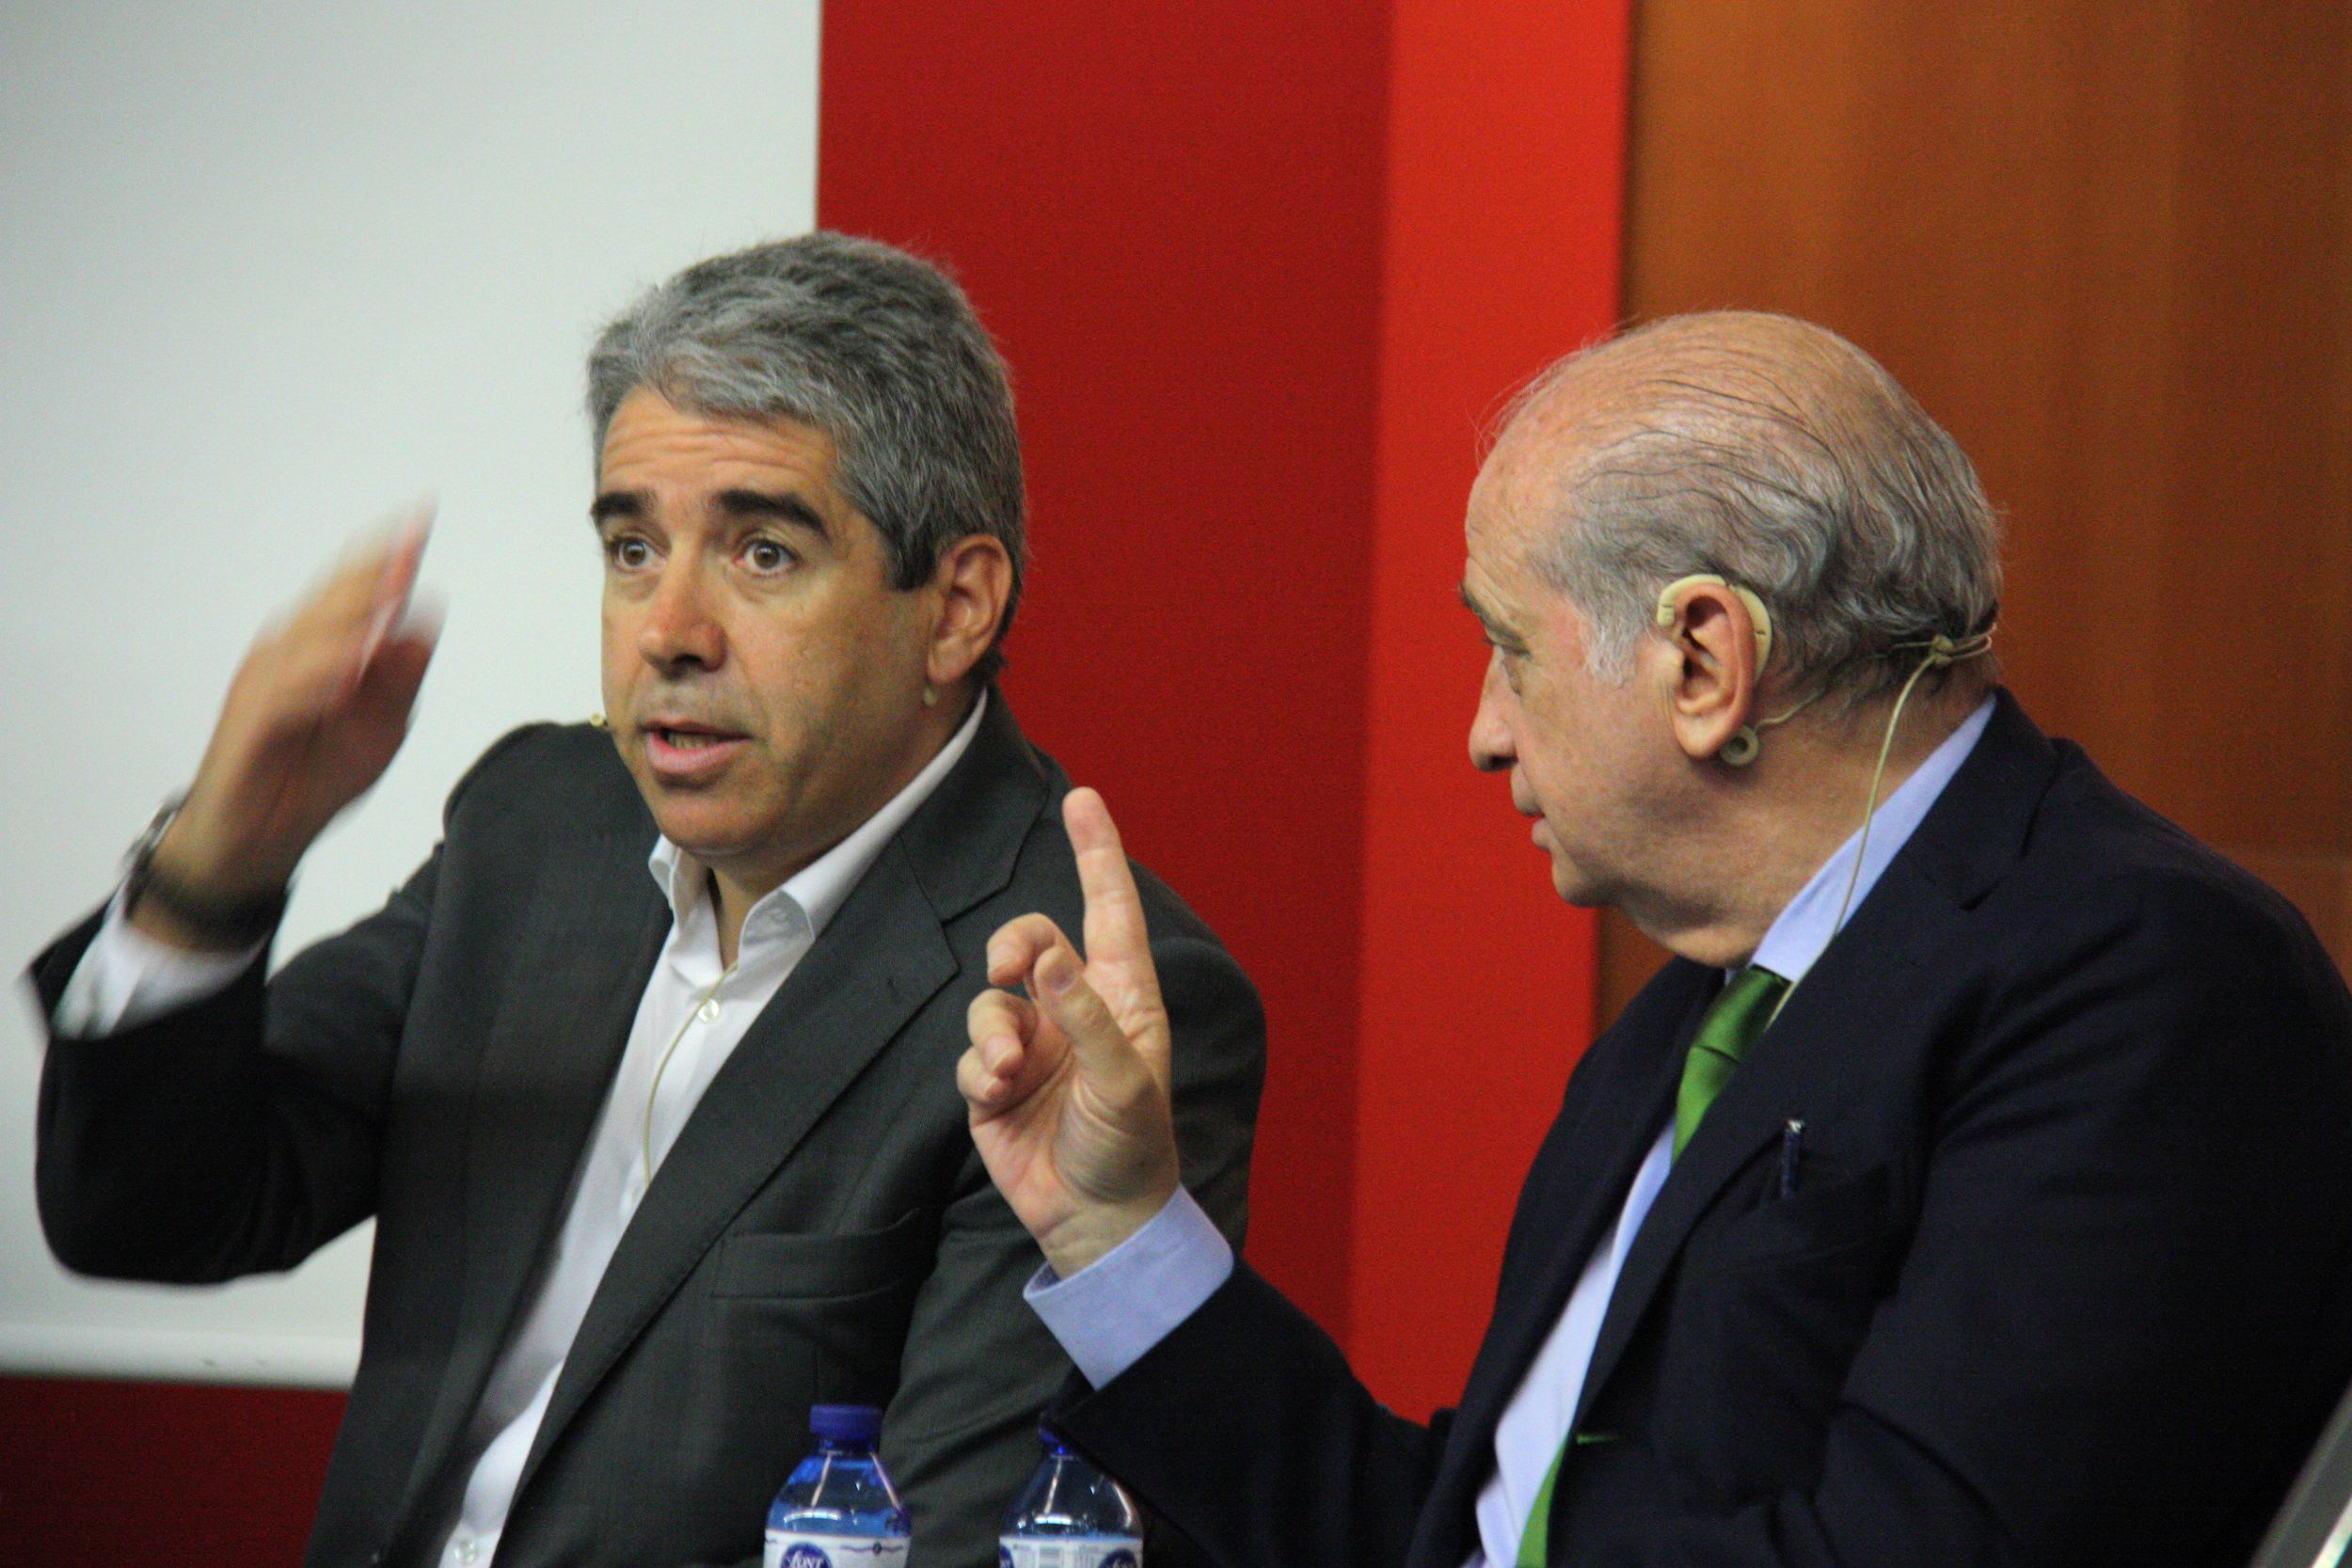 Francesc Homs y Jorge Fernández se enfrentan en un debate en la UPF